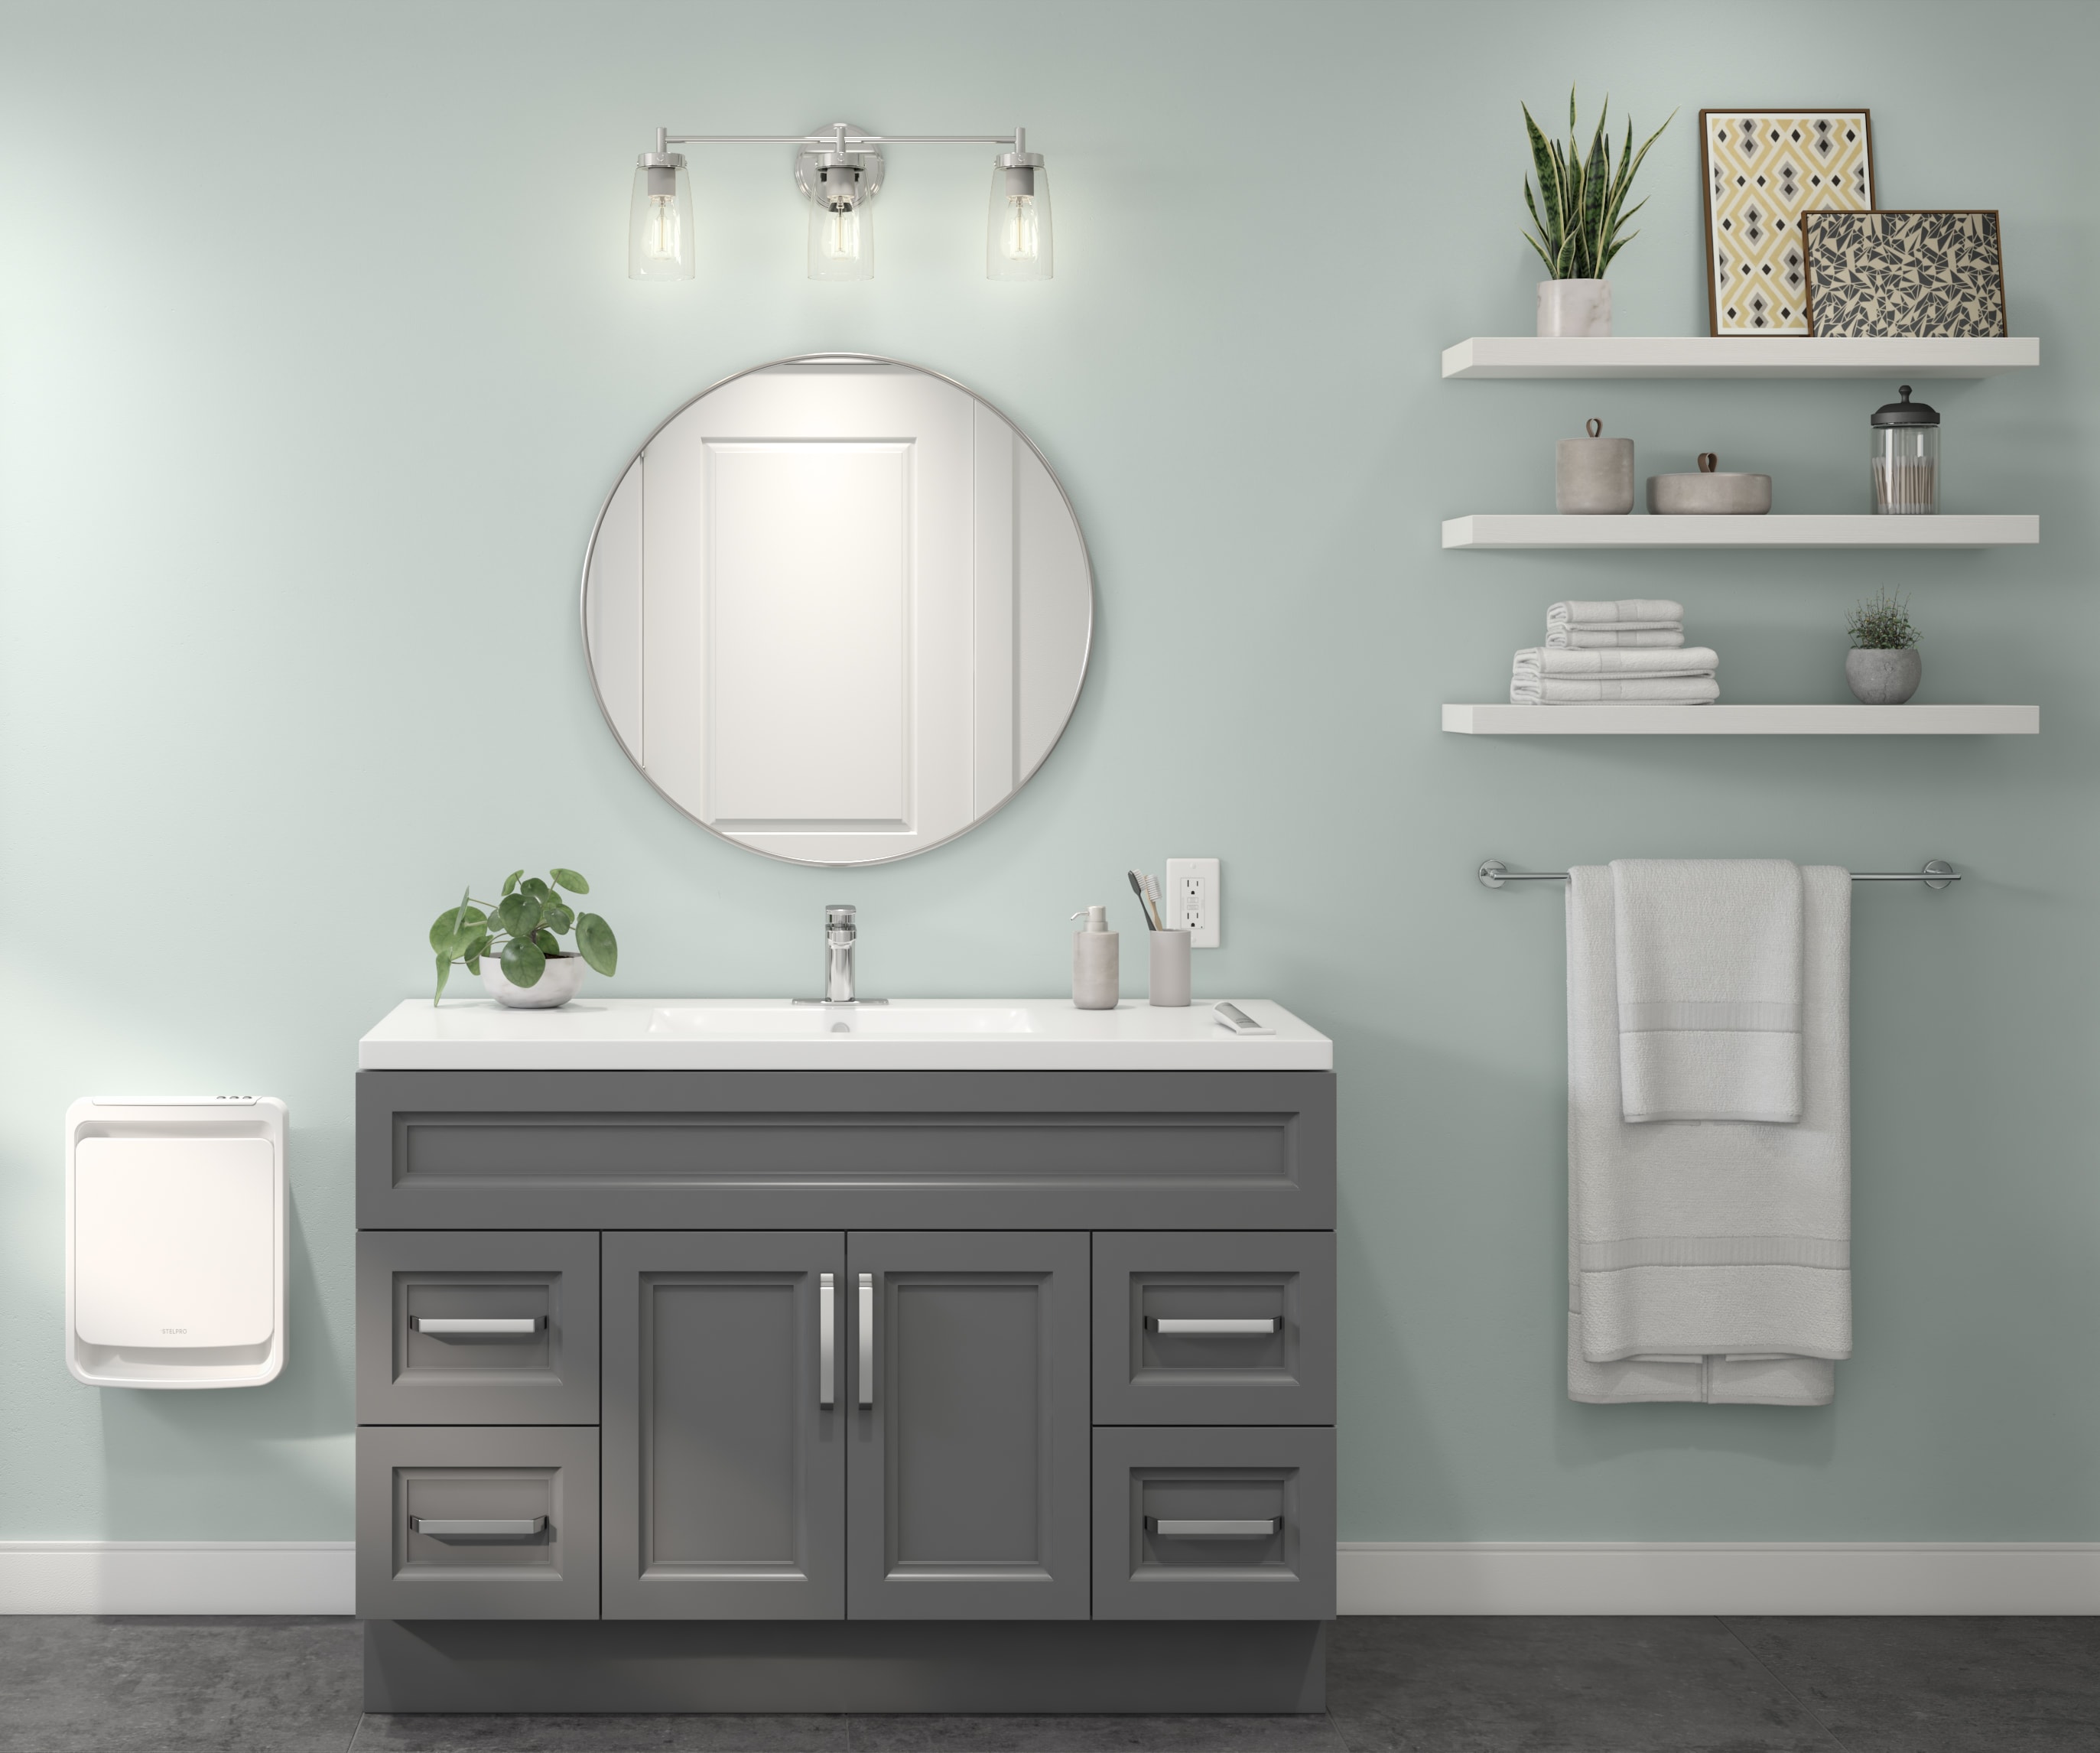 Grey bathroom vanity with three wall shelves